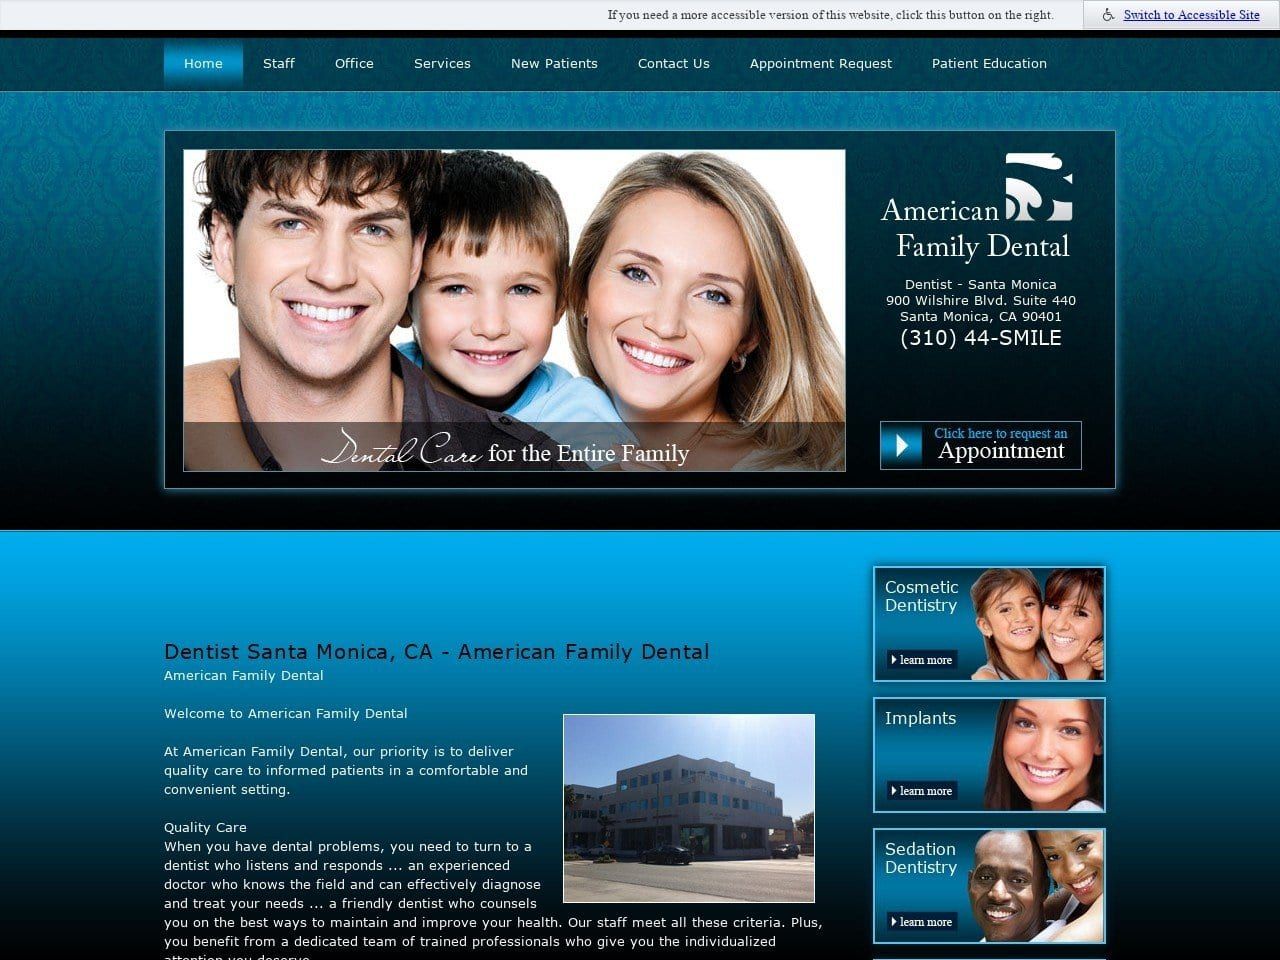 American Family Dental Website Screenshot from yoursantamonicadentist.com